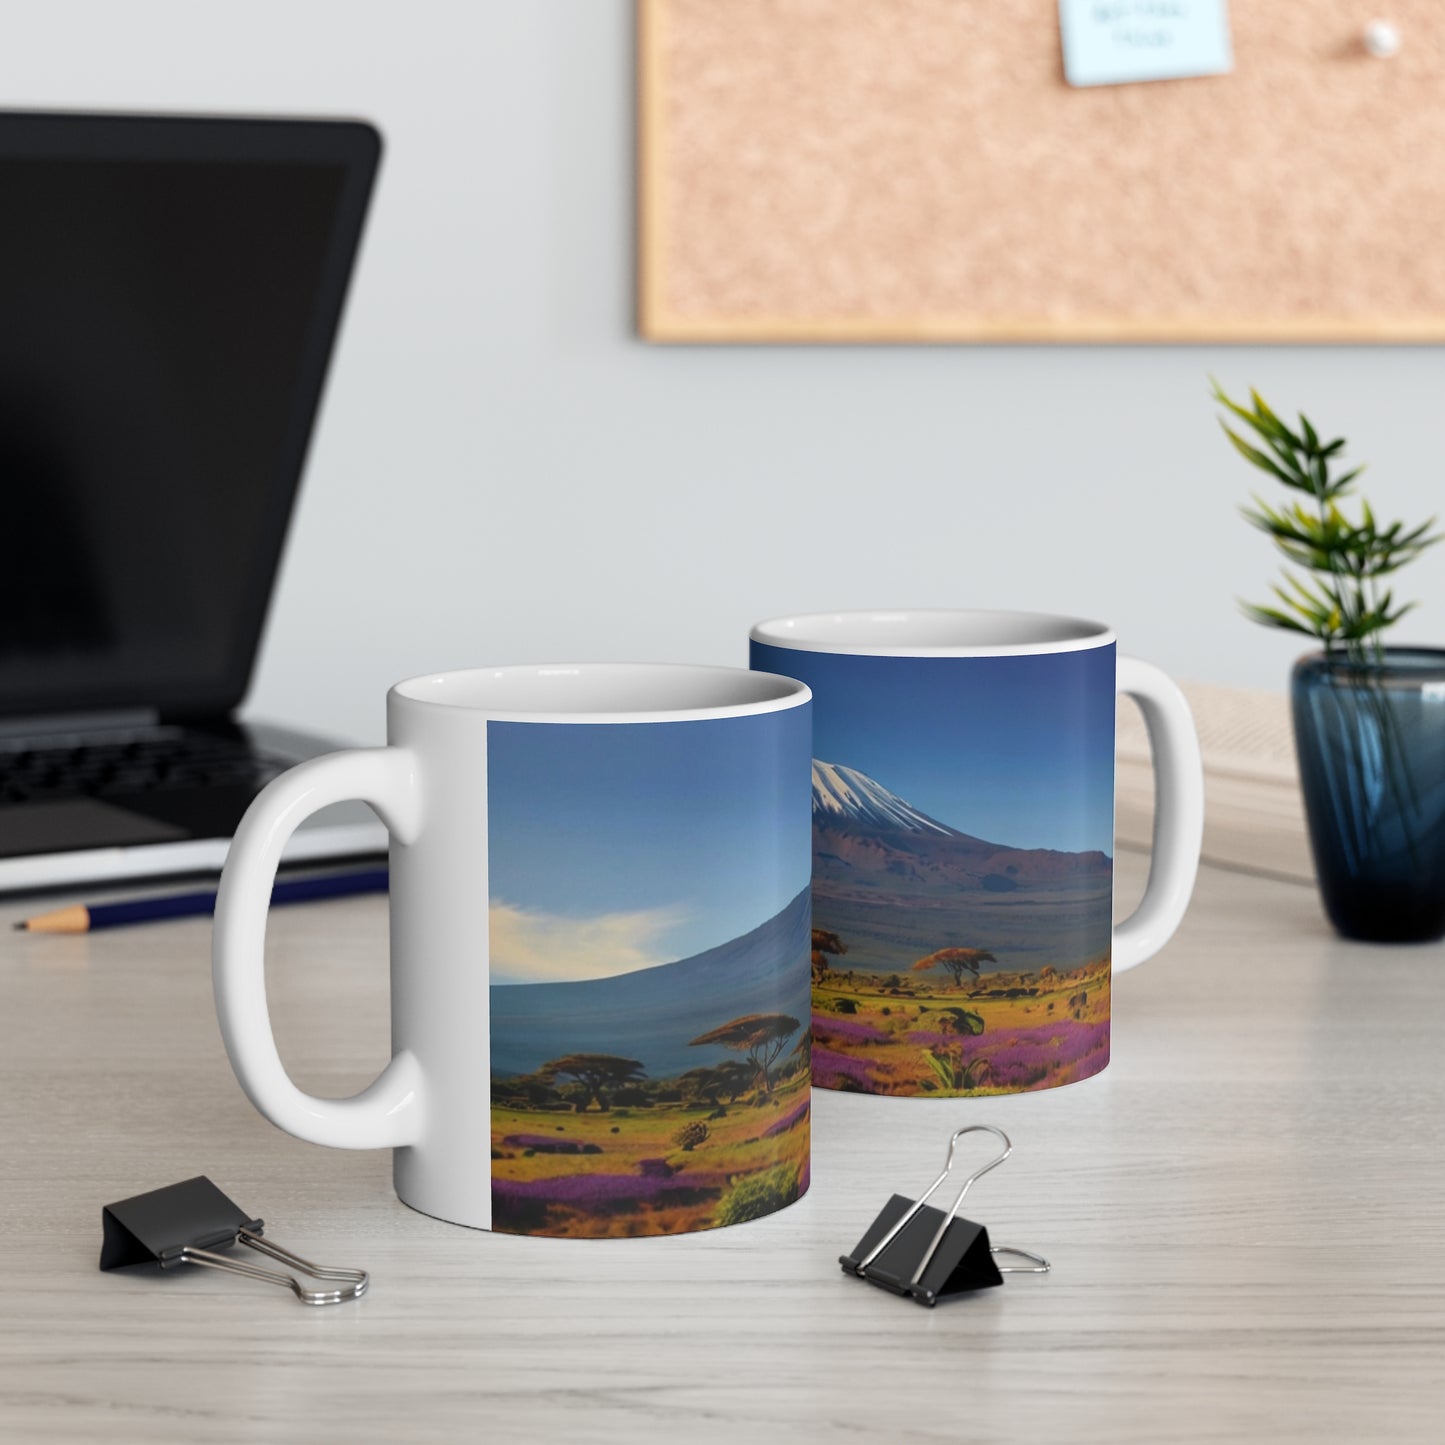 Mount Kilimanjaro Mug - Ceramic Coffee Mug 11oz